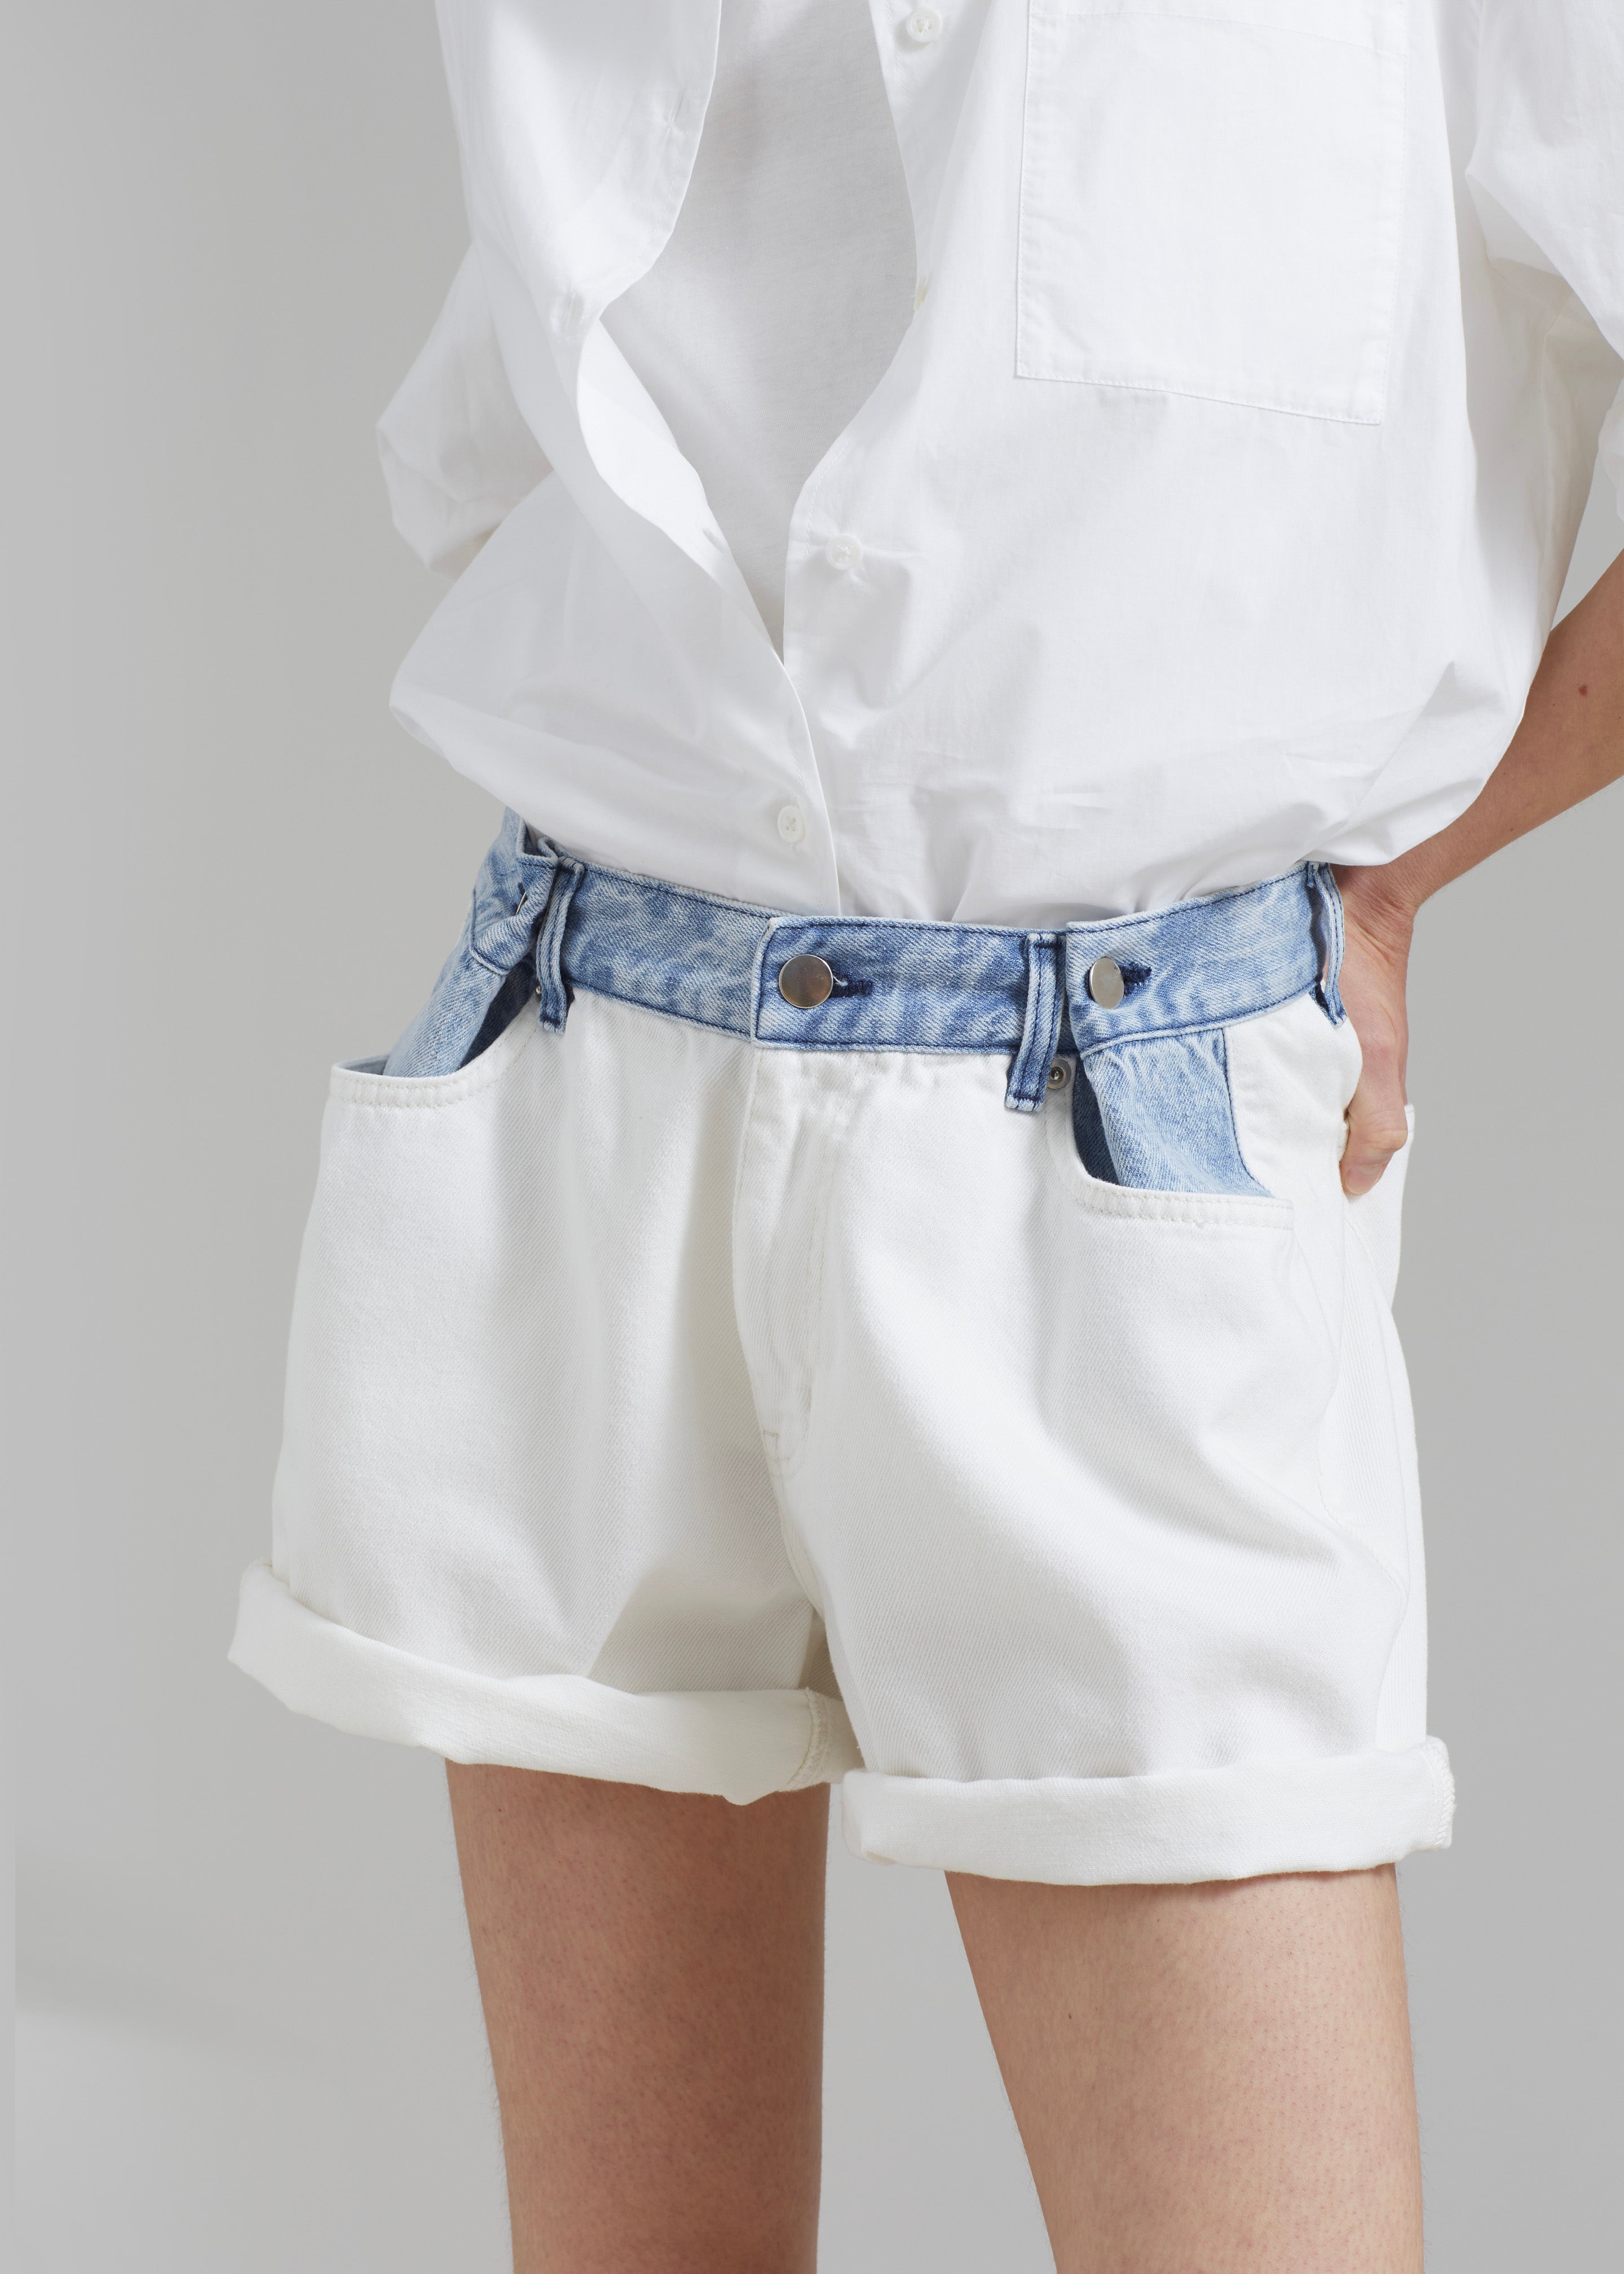 Hayla Contrast Denim Shorts - Off White/Blue - 2